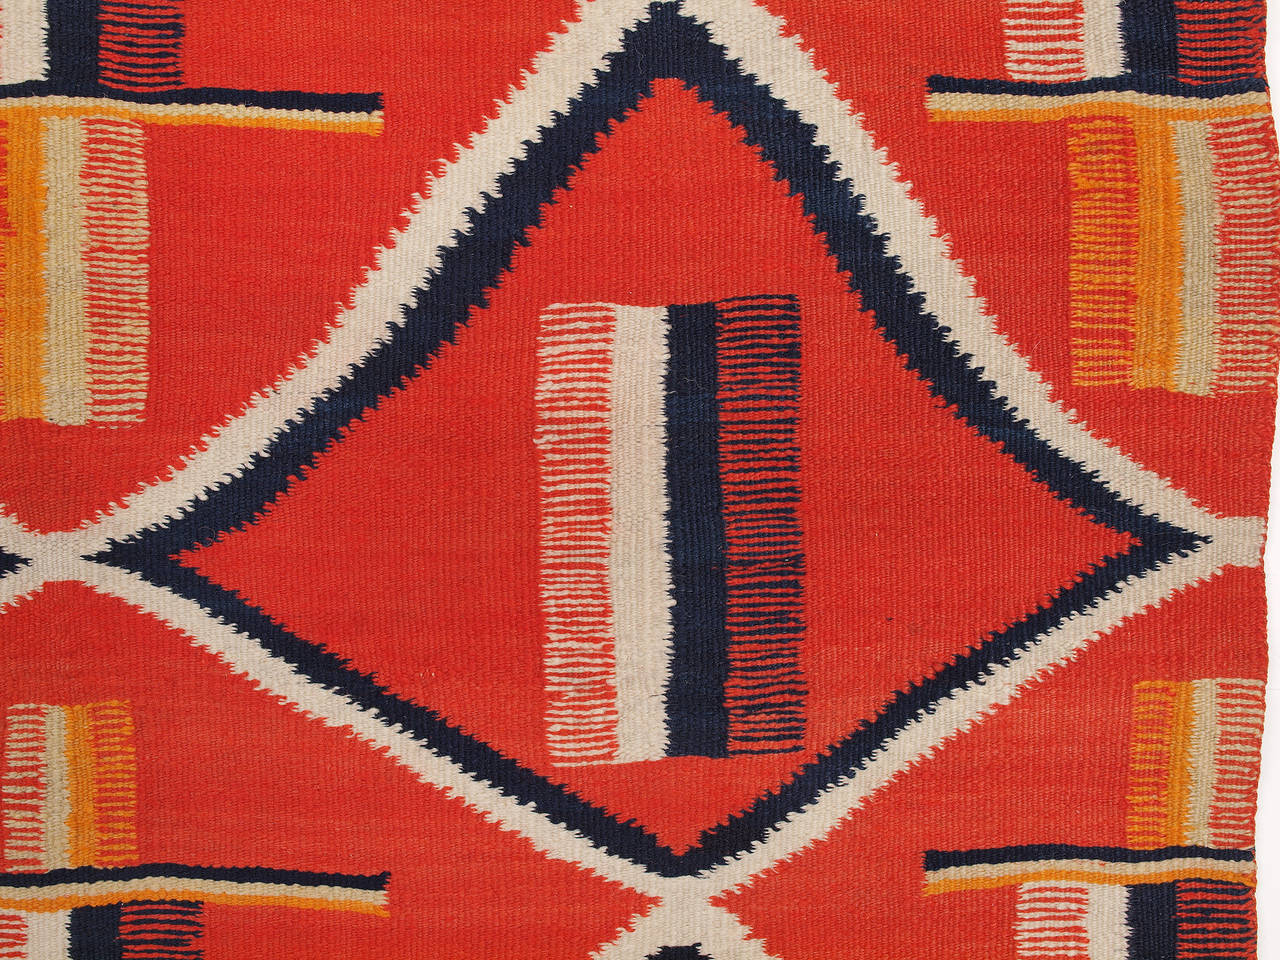 Woven Late Classic Period Navajo Wearing Blanket, circa 1875